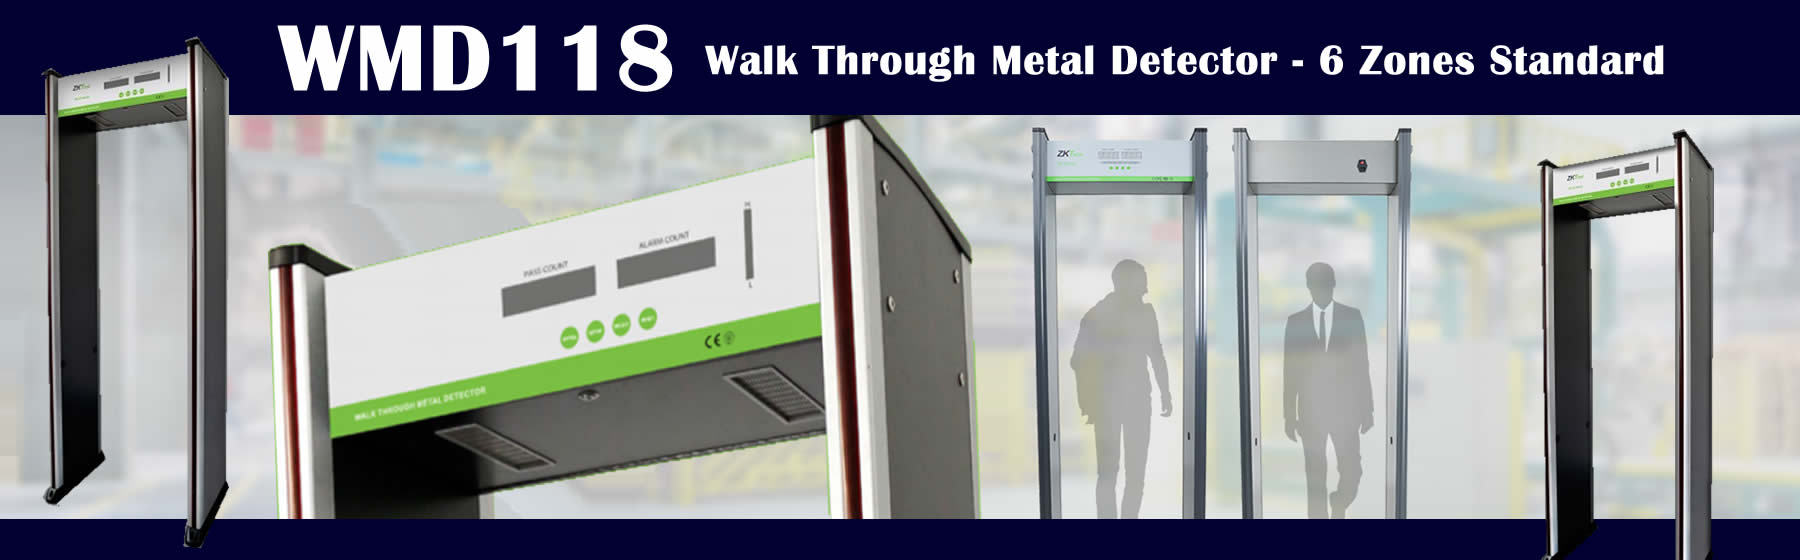 WMD118 Walk Through Metal Detector banner